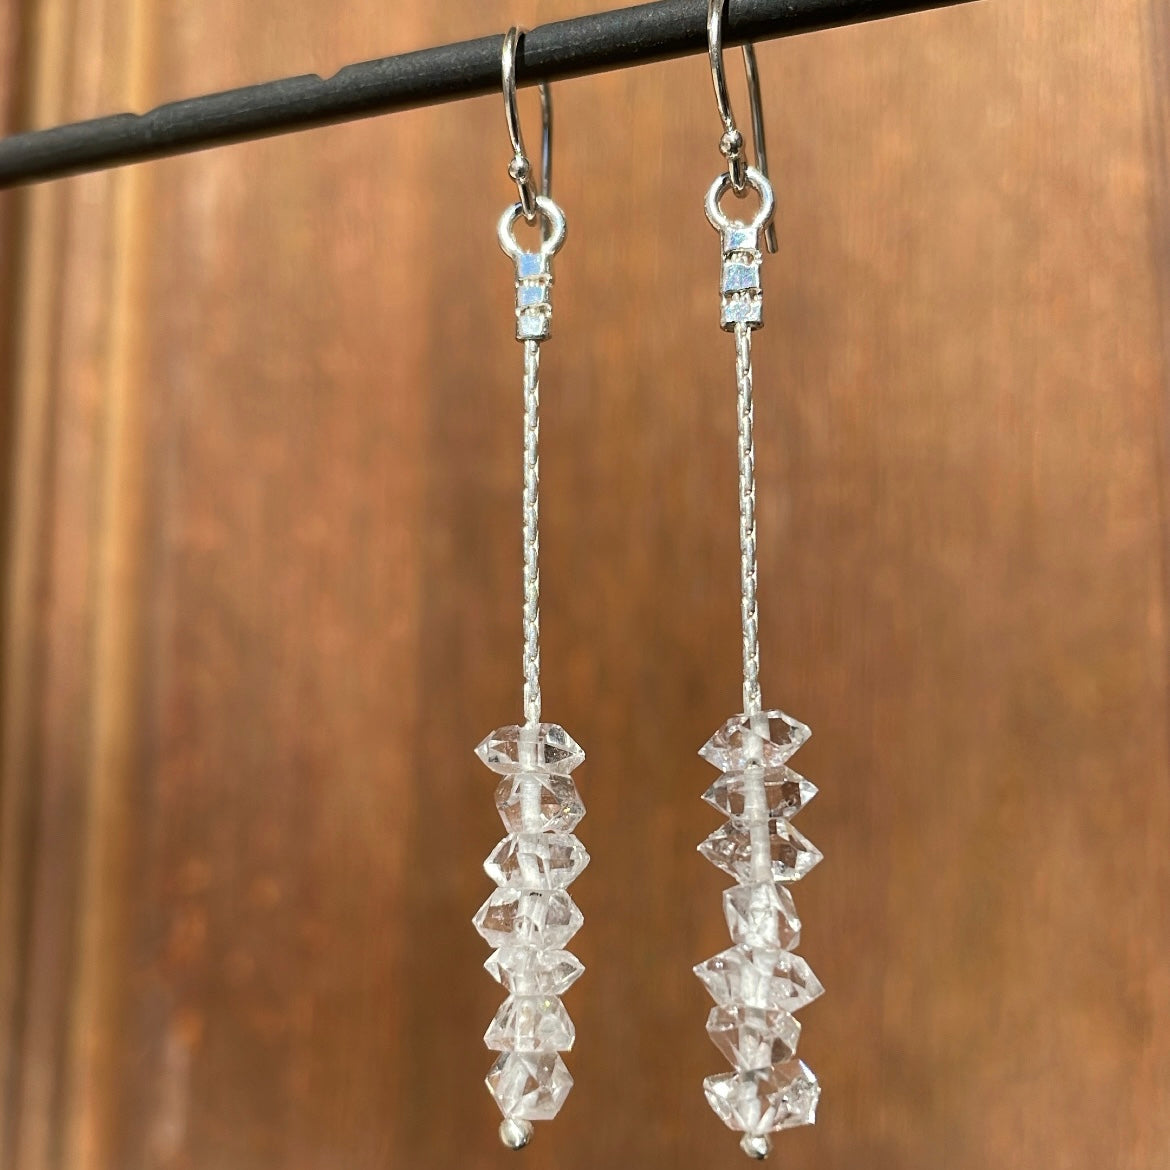 Stackers herkimer diamonds earrings-serena kojimoto studio